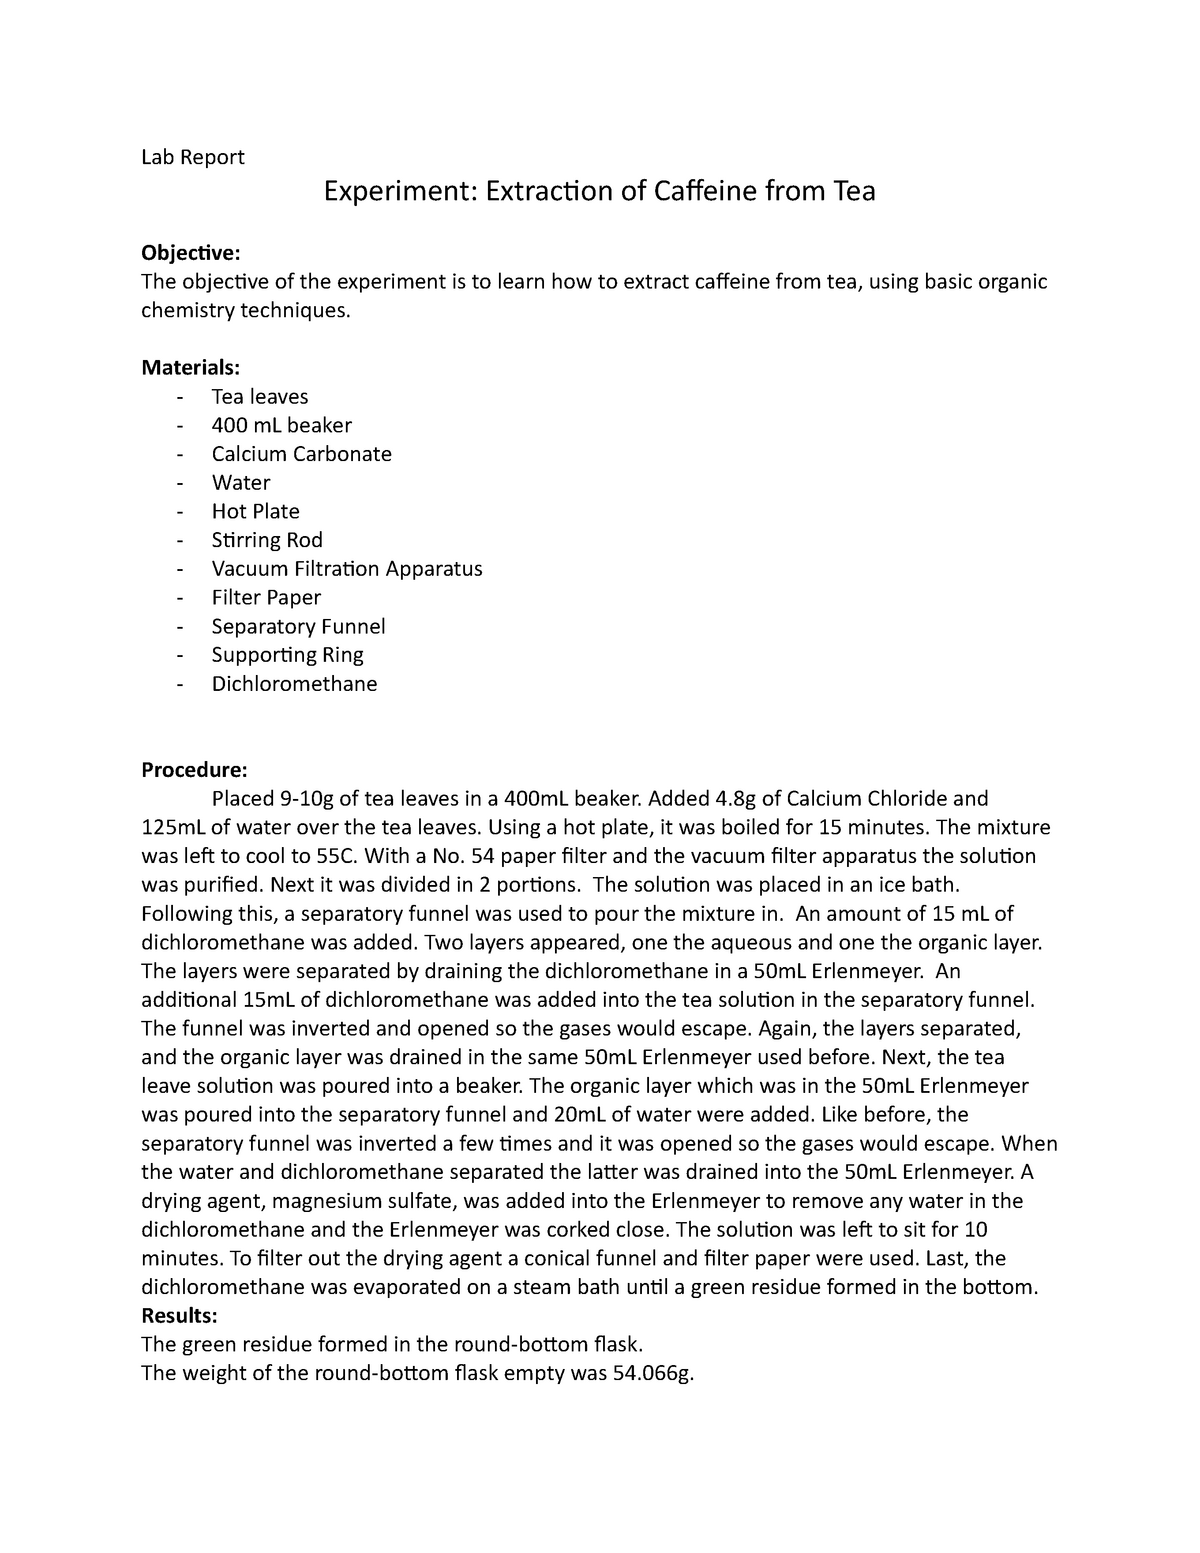 caffeine extraction lab report